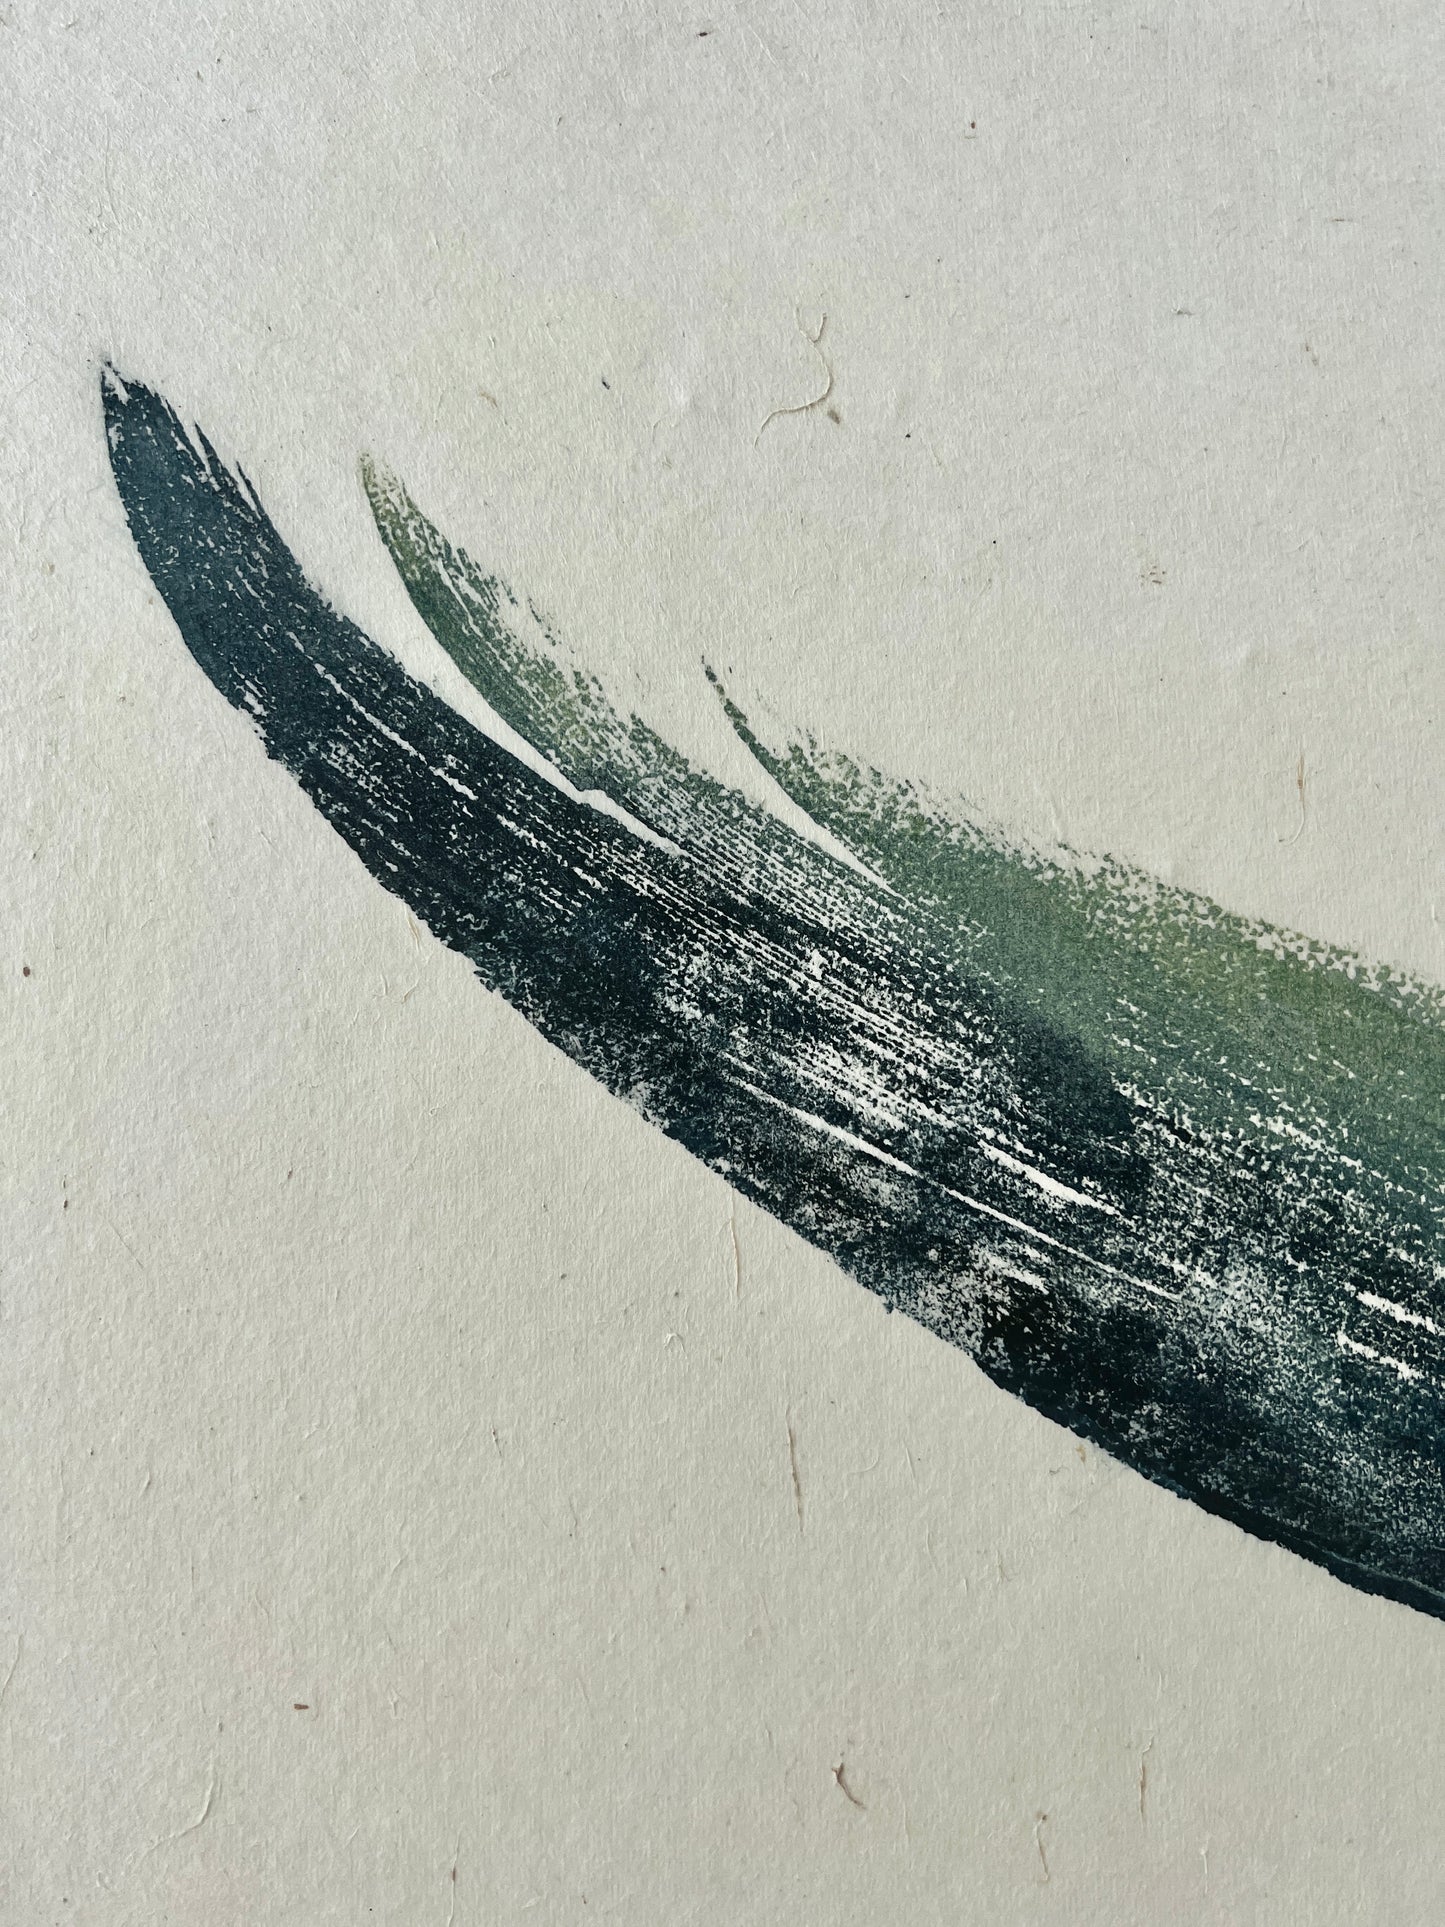 Gyotaku impression taken from a Blue Fin Tuna Tail